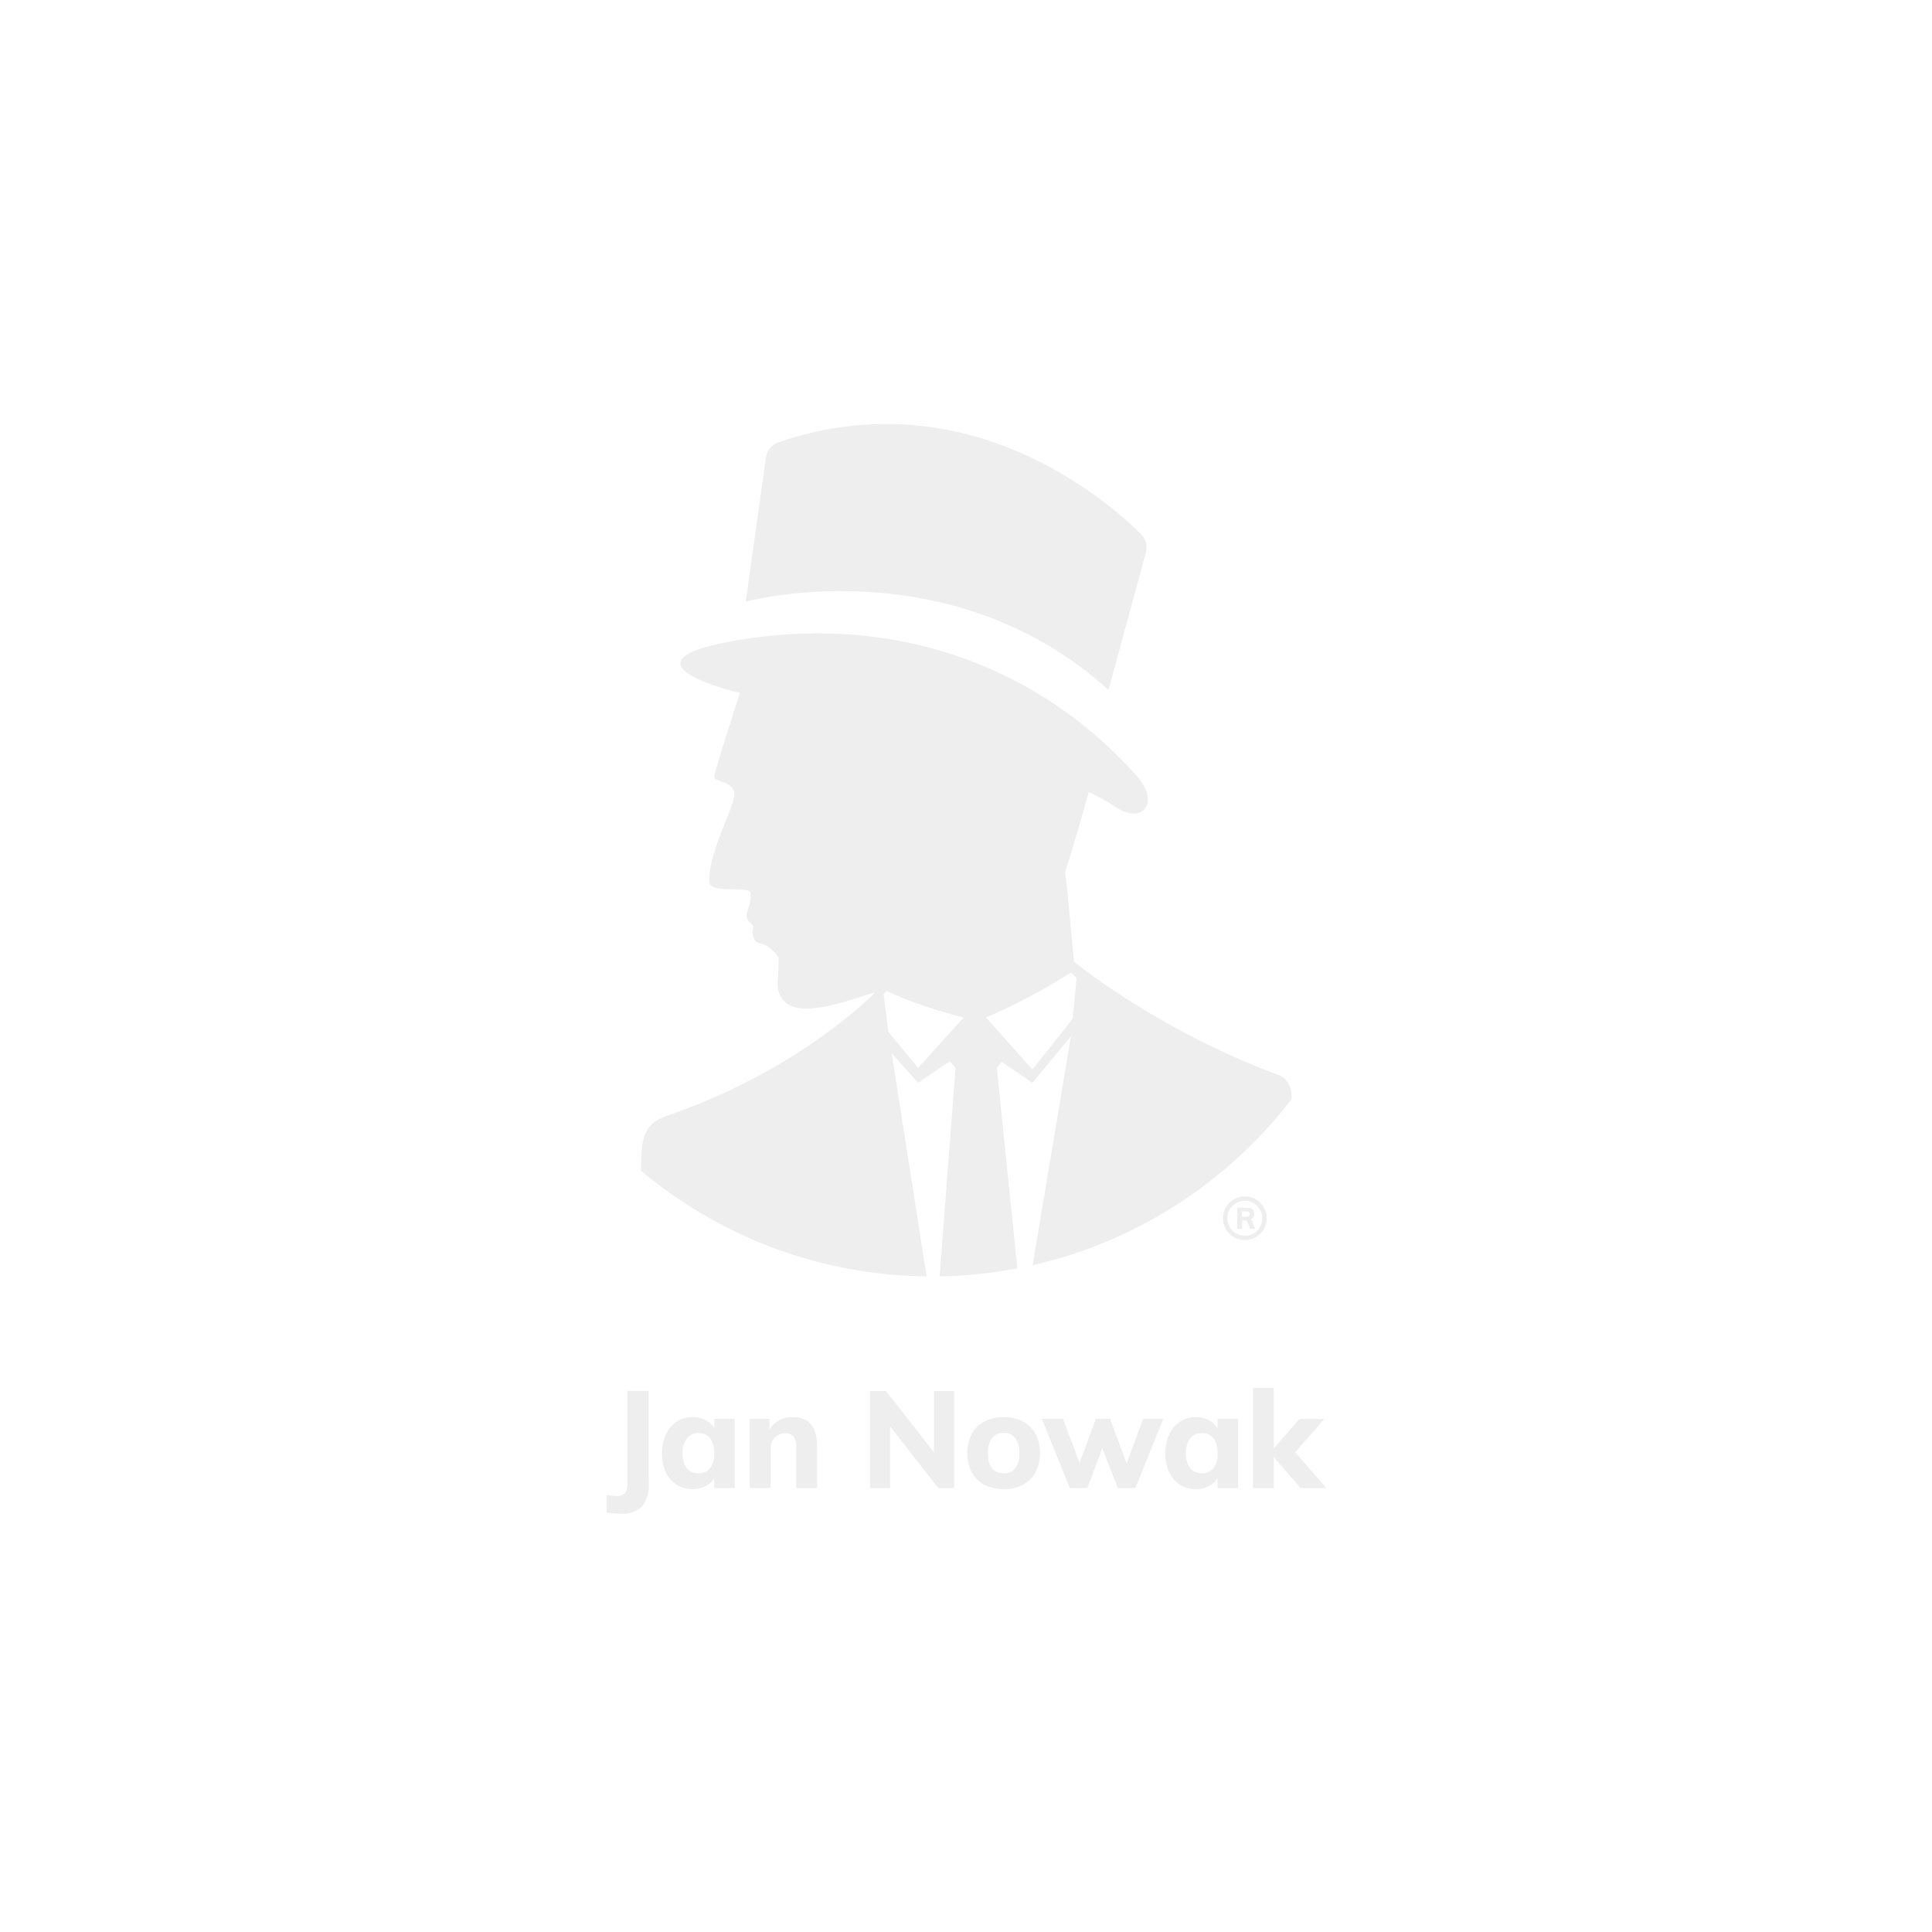 JAN NOWAK model DANIEL 900x1850x400 biurowa szafa metalowa na akta: antracytowo-biała